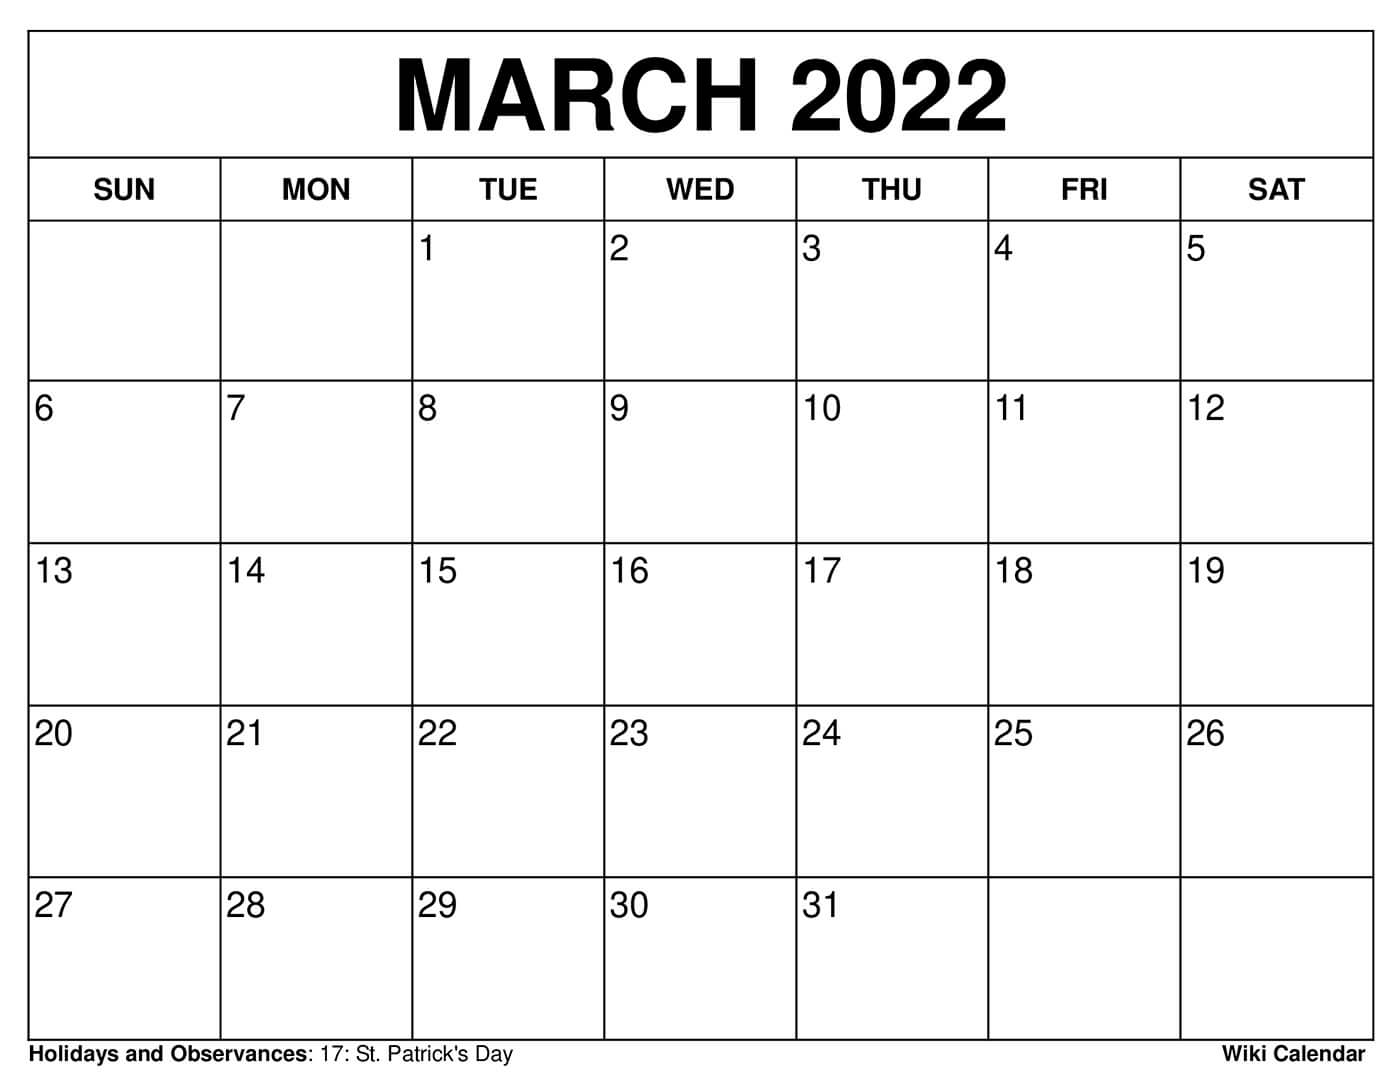 March 2022 Calendar Printable Free Free Printable March 2022 Calendars - Wiki Calendar